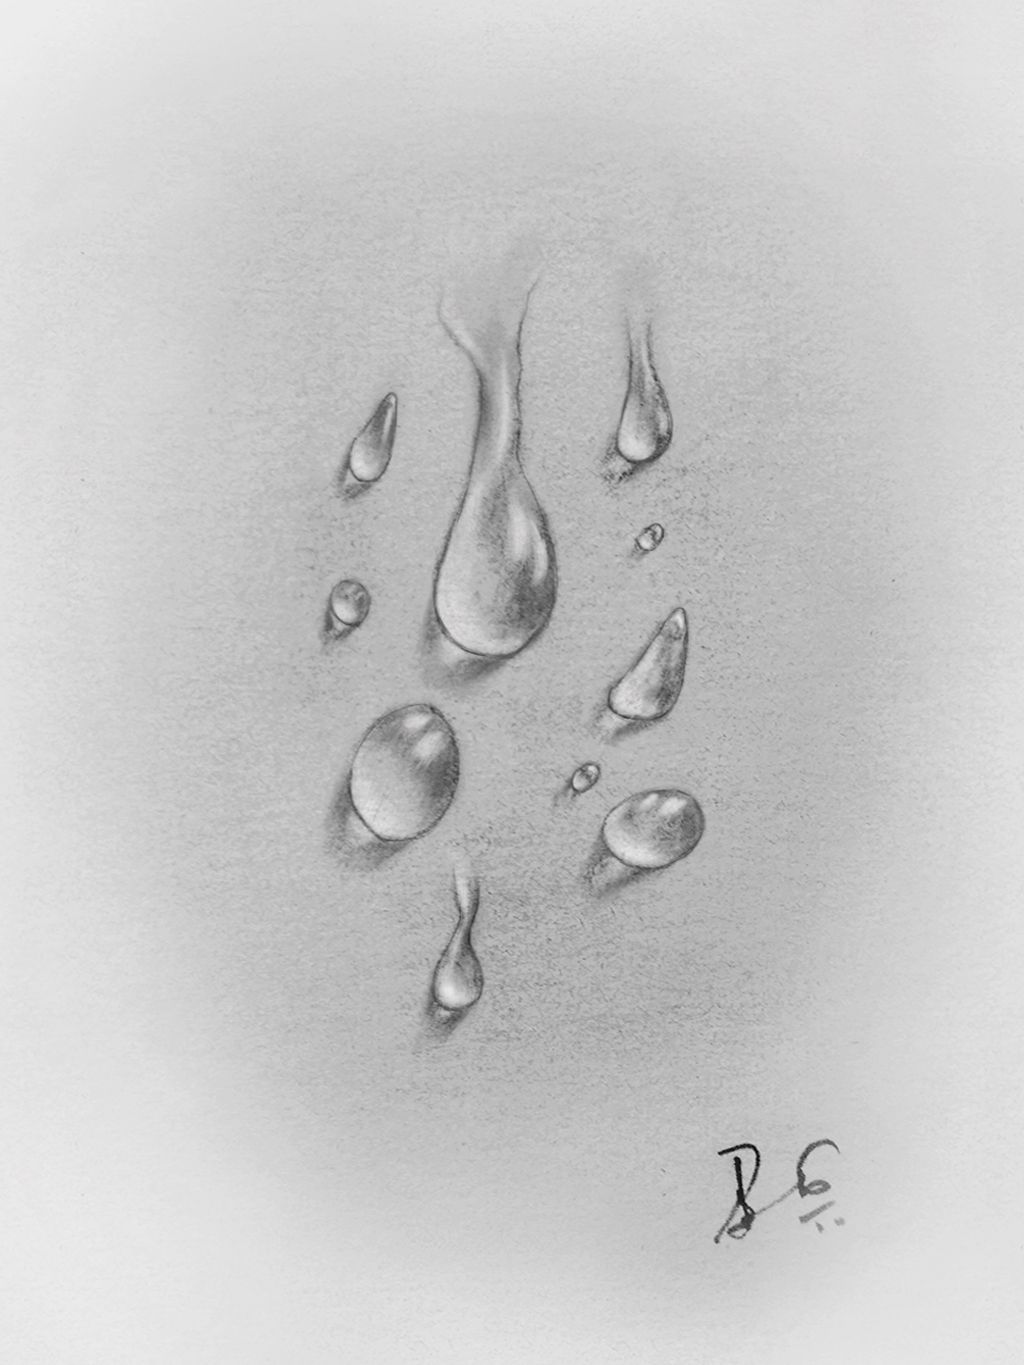 Sketch Drop Of Water Drawing - SethPorter1.blogspot.com